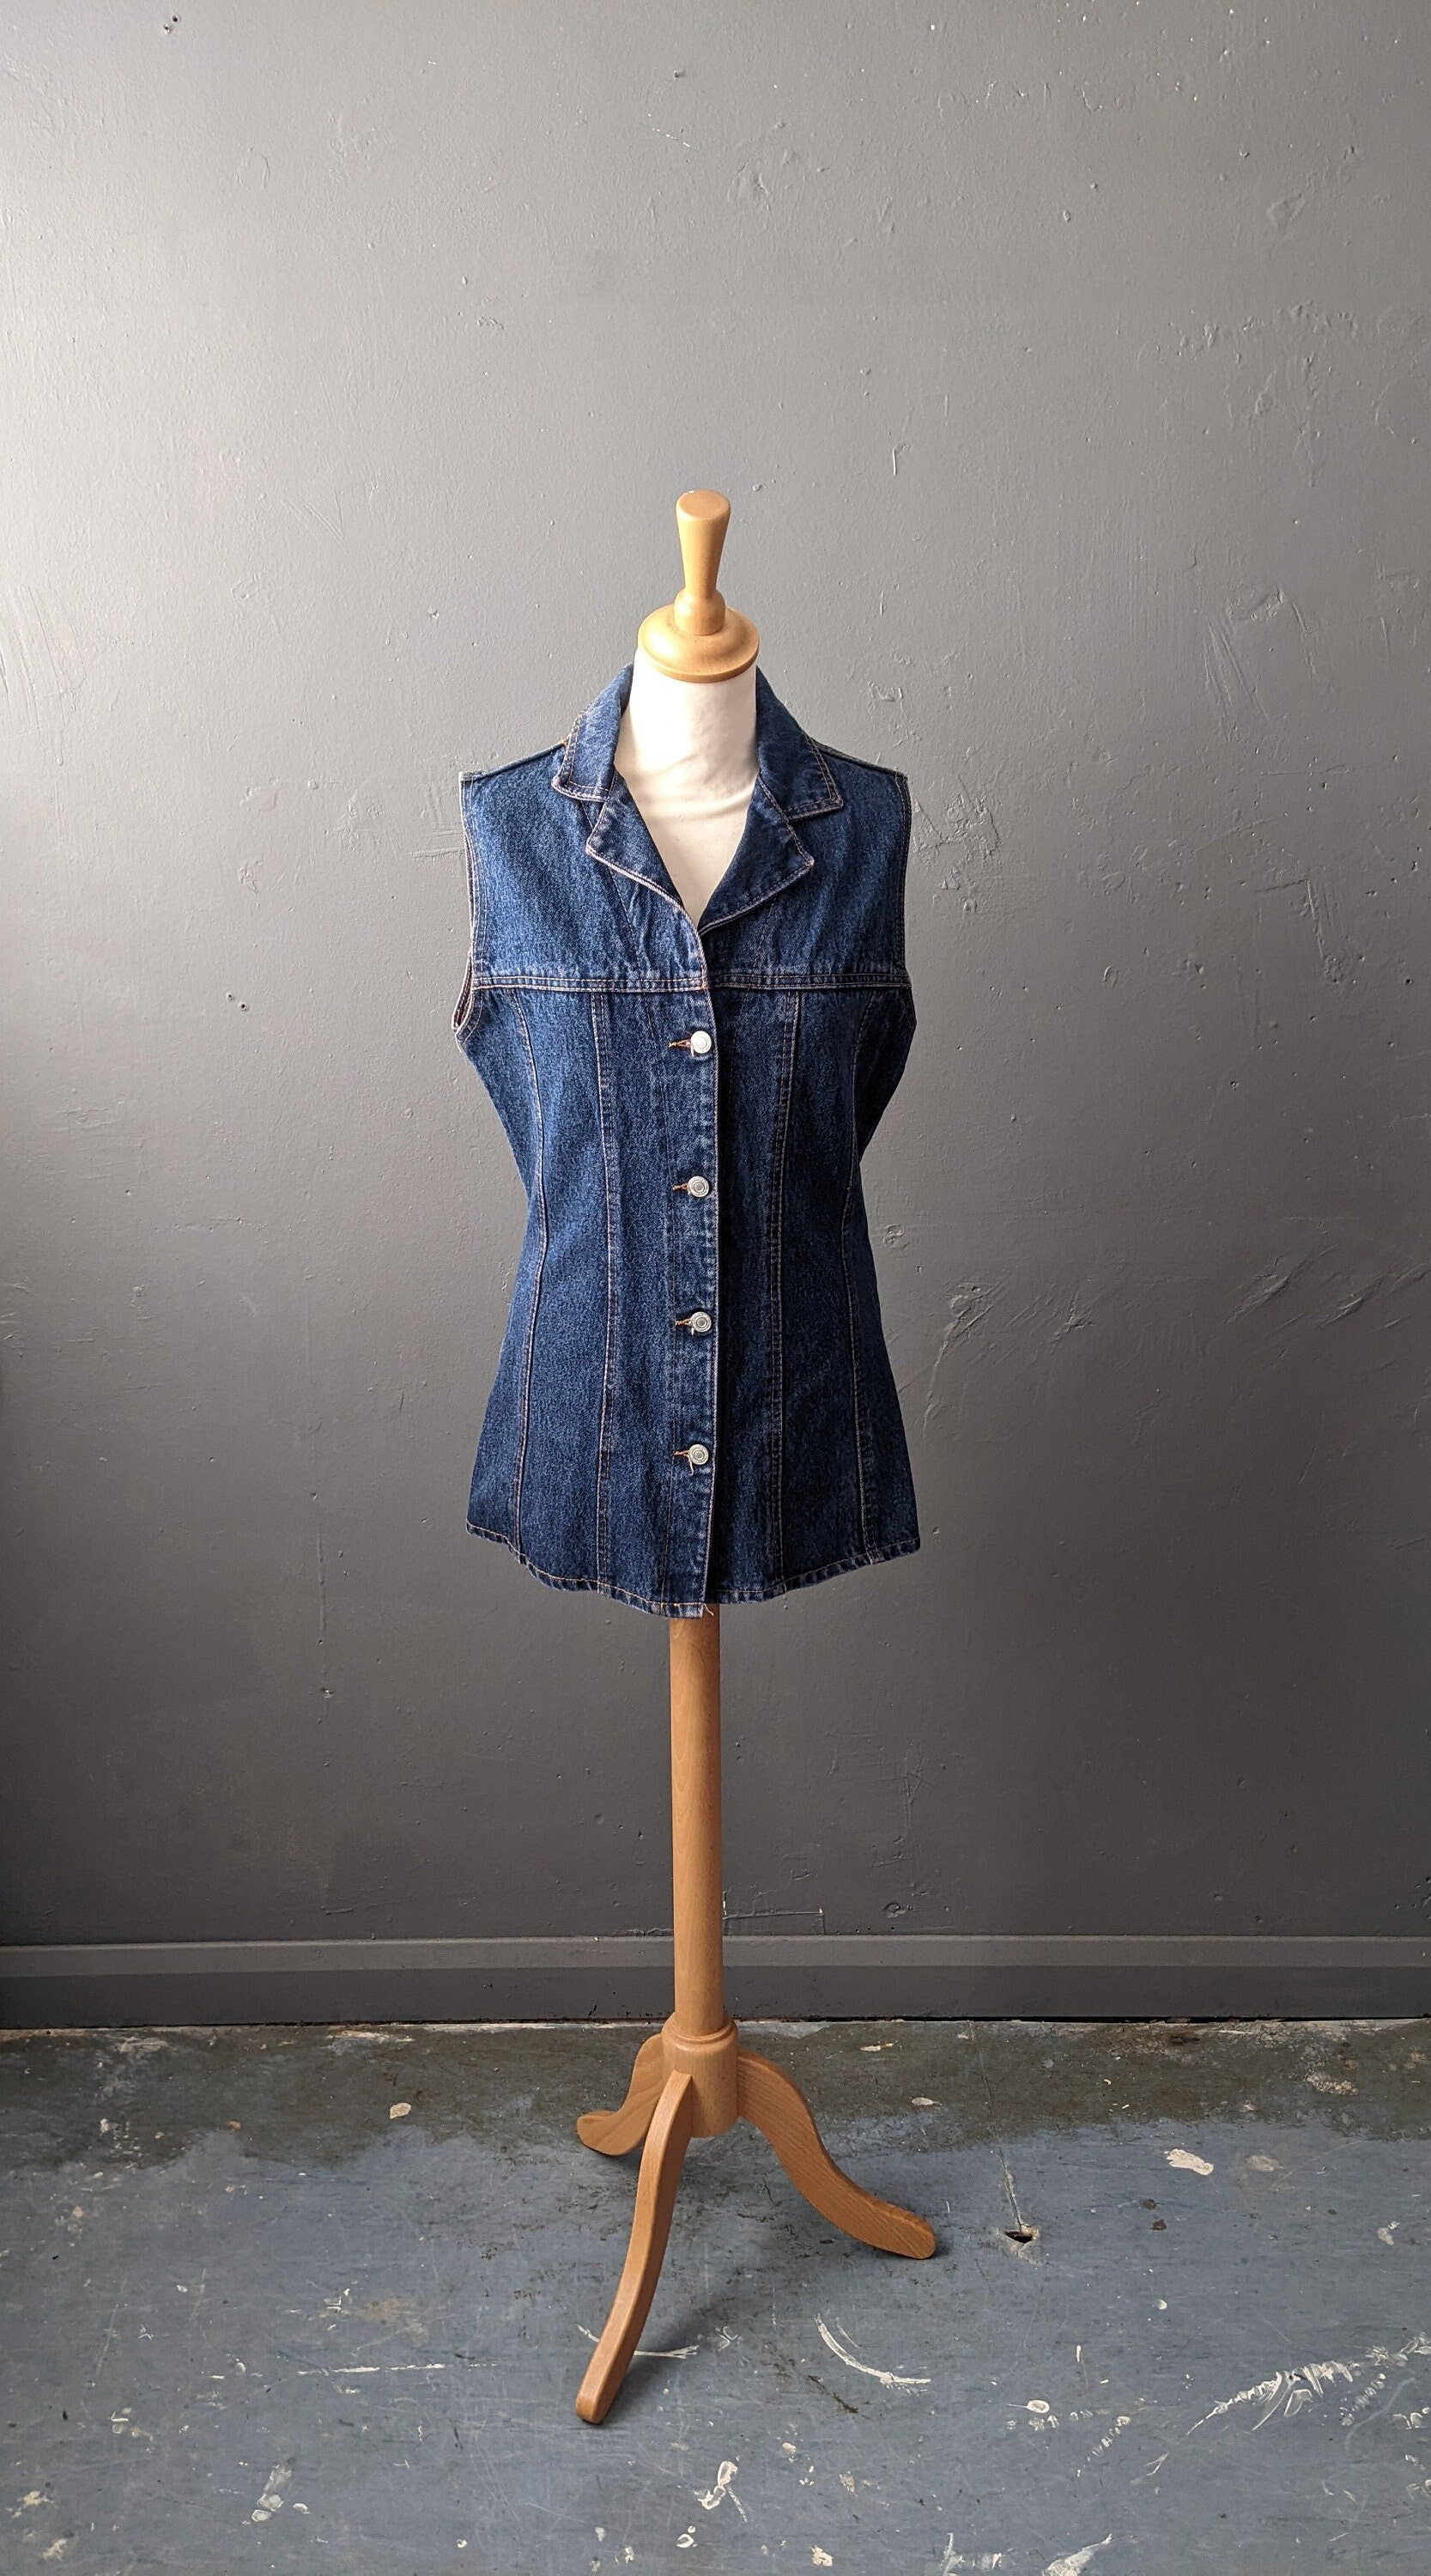 90s Indigo Denim Waistcoat by New Frontier, Long Sleeveless Jean Gilet Vest, Overdyed, Size Small